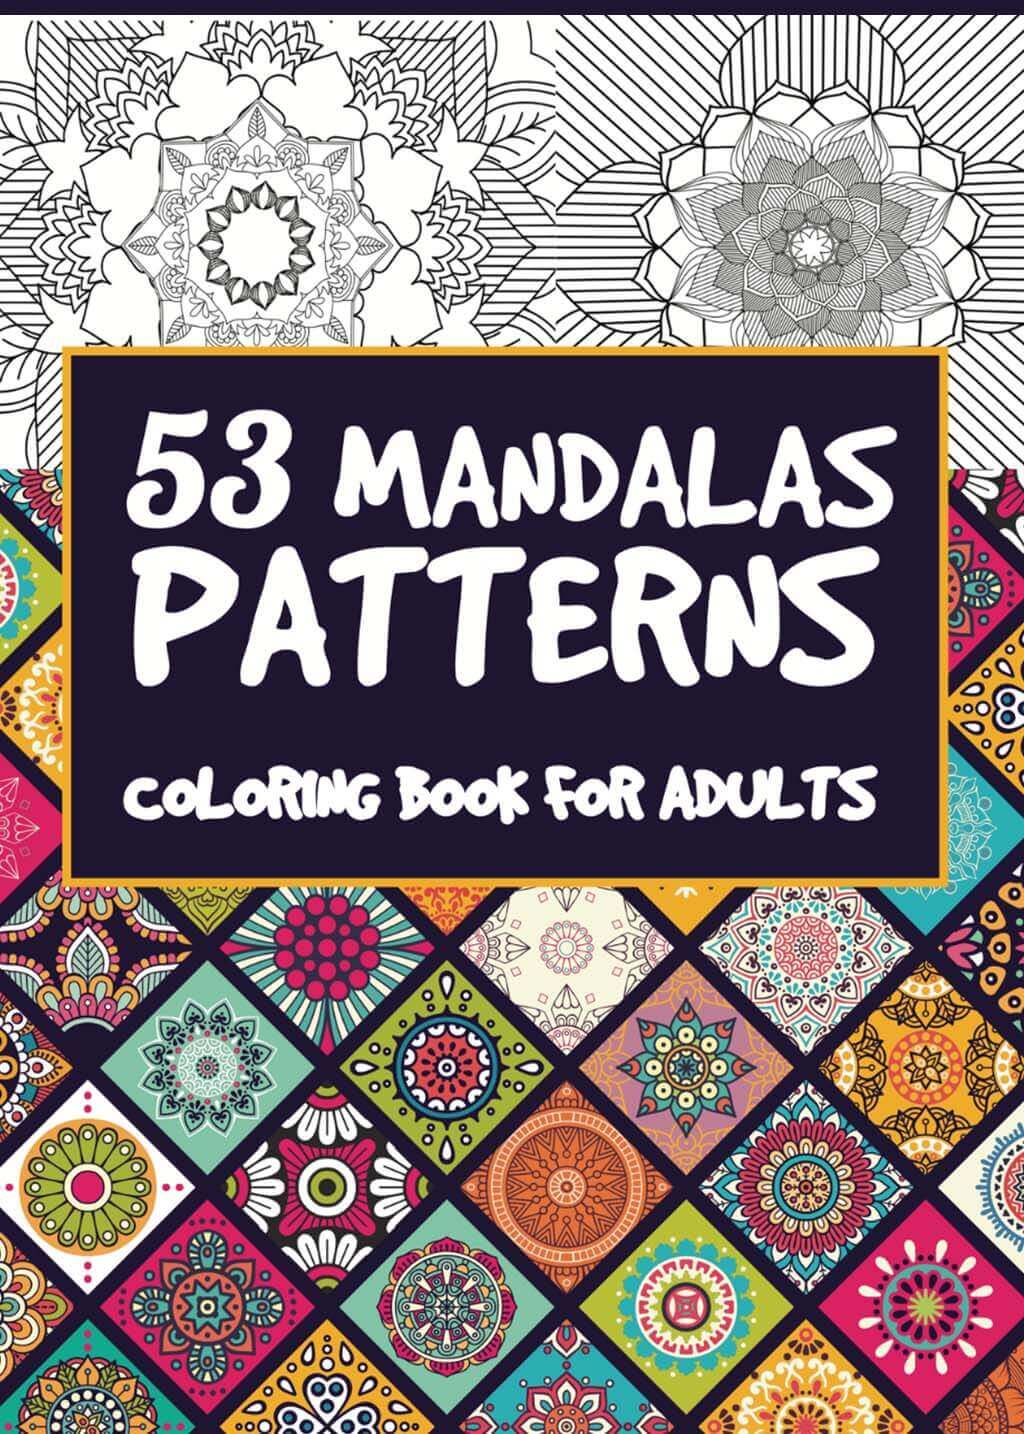 Mandalas patterns coloring book